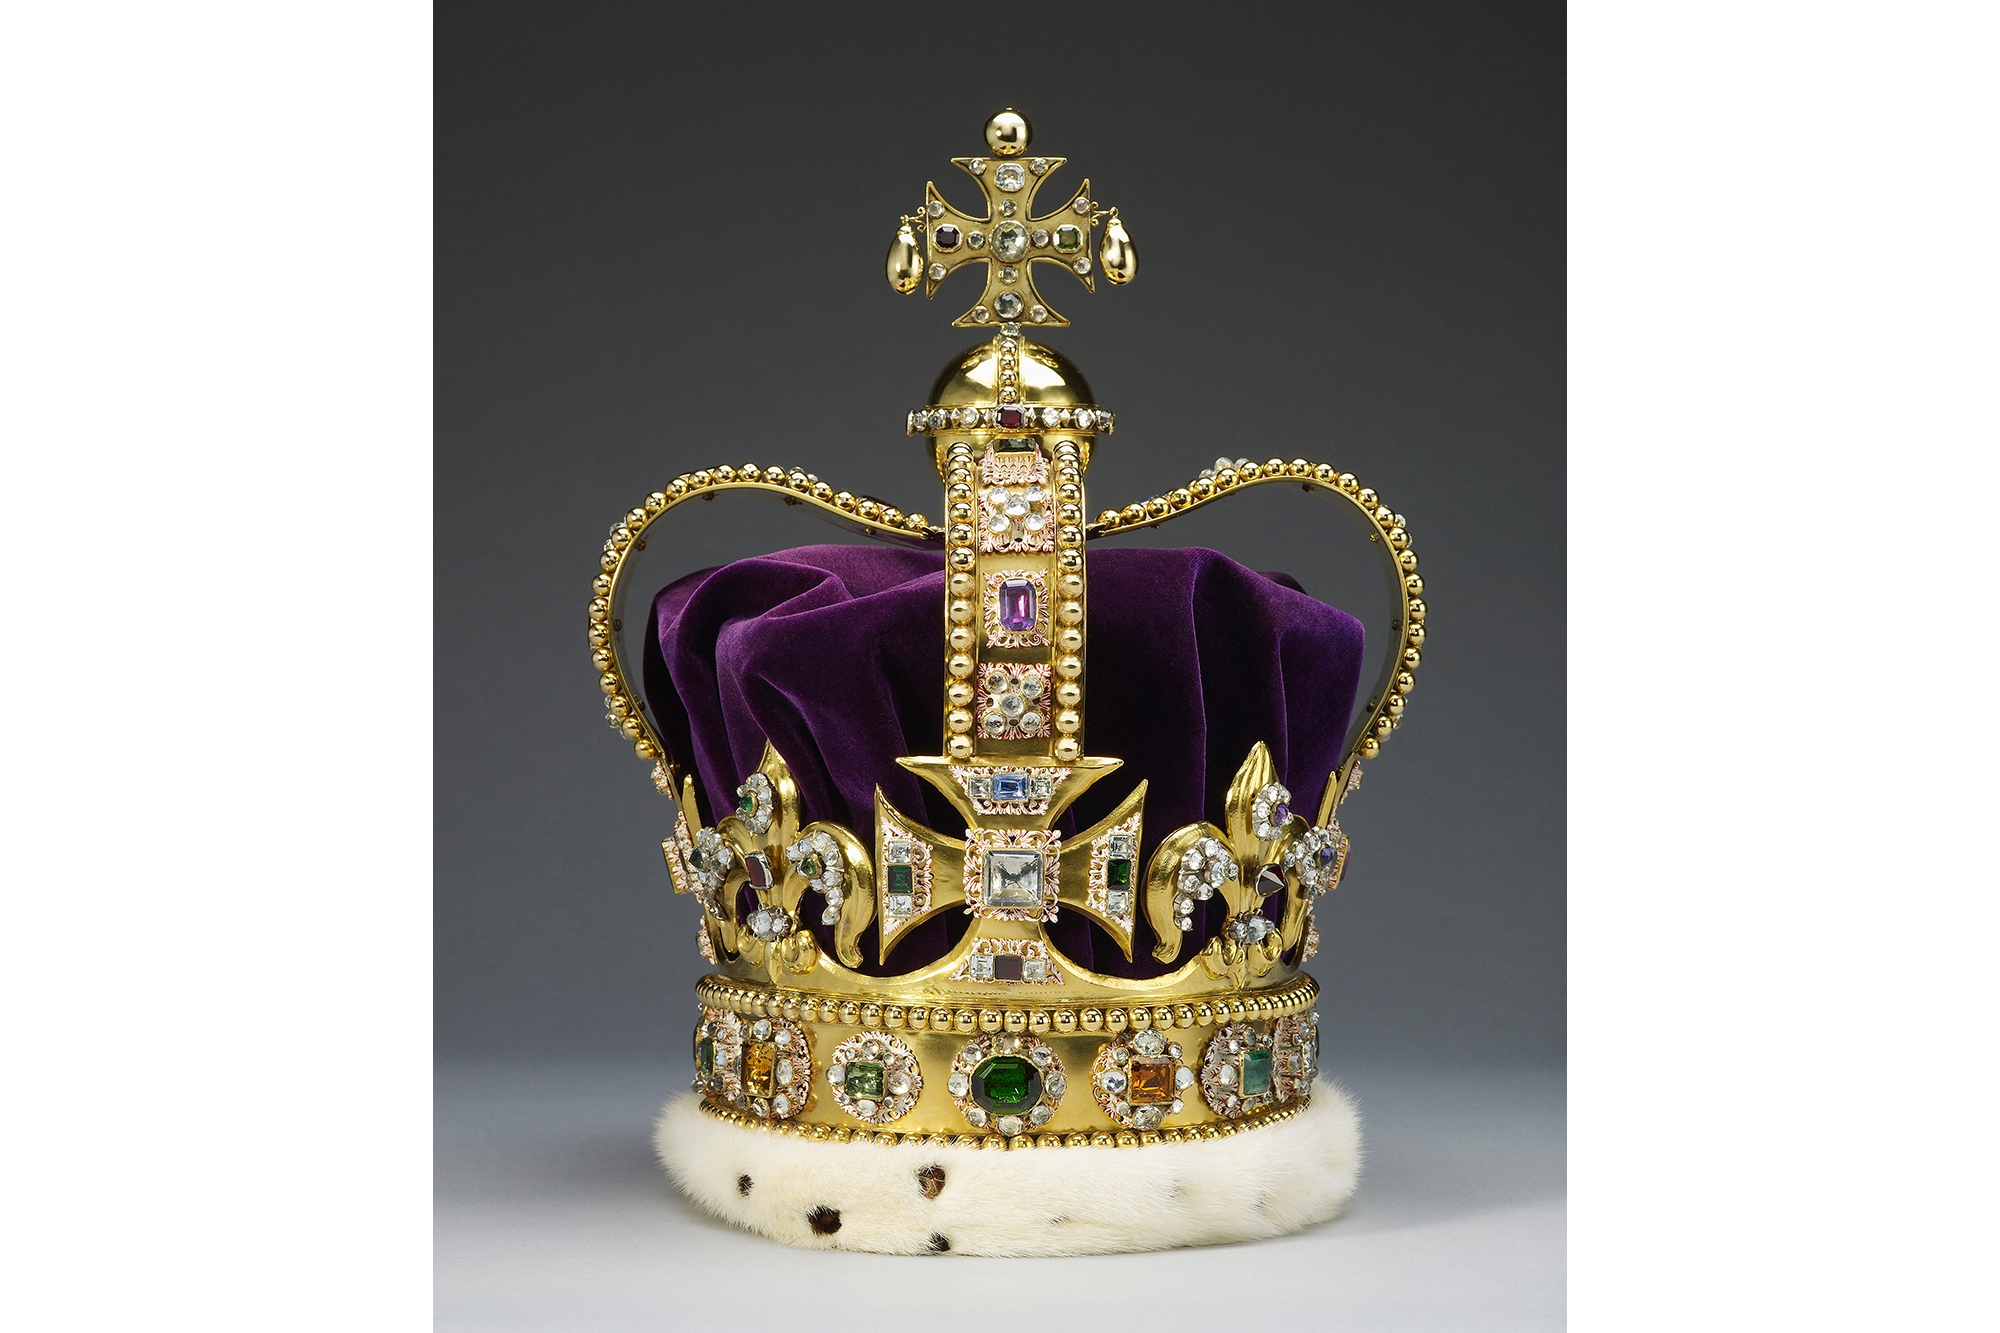 Edwardskrone (Archivbild: Royal Collestion Trust/Buckingham Palace/AFP)